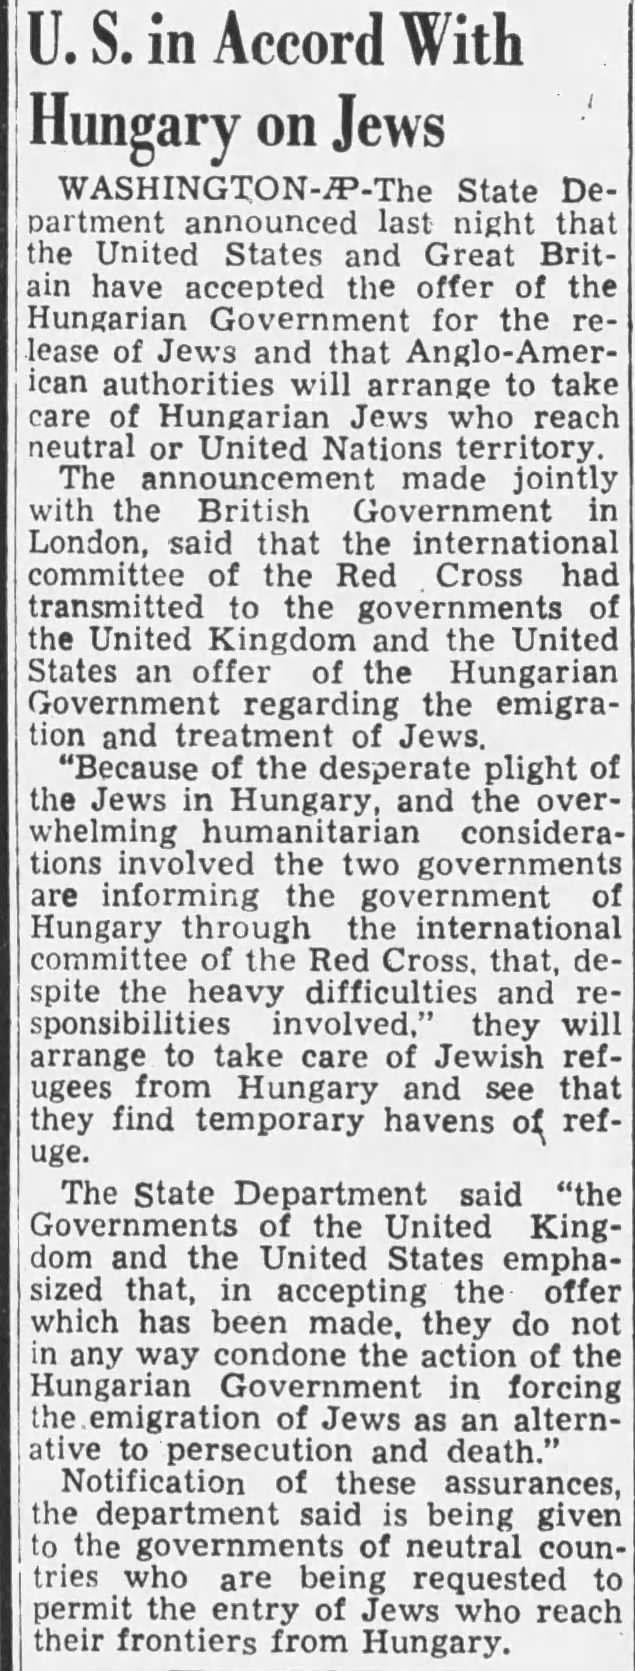 U.S. in Accord With Hungary on Jews